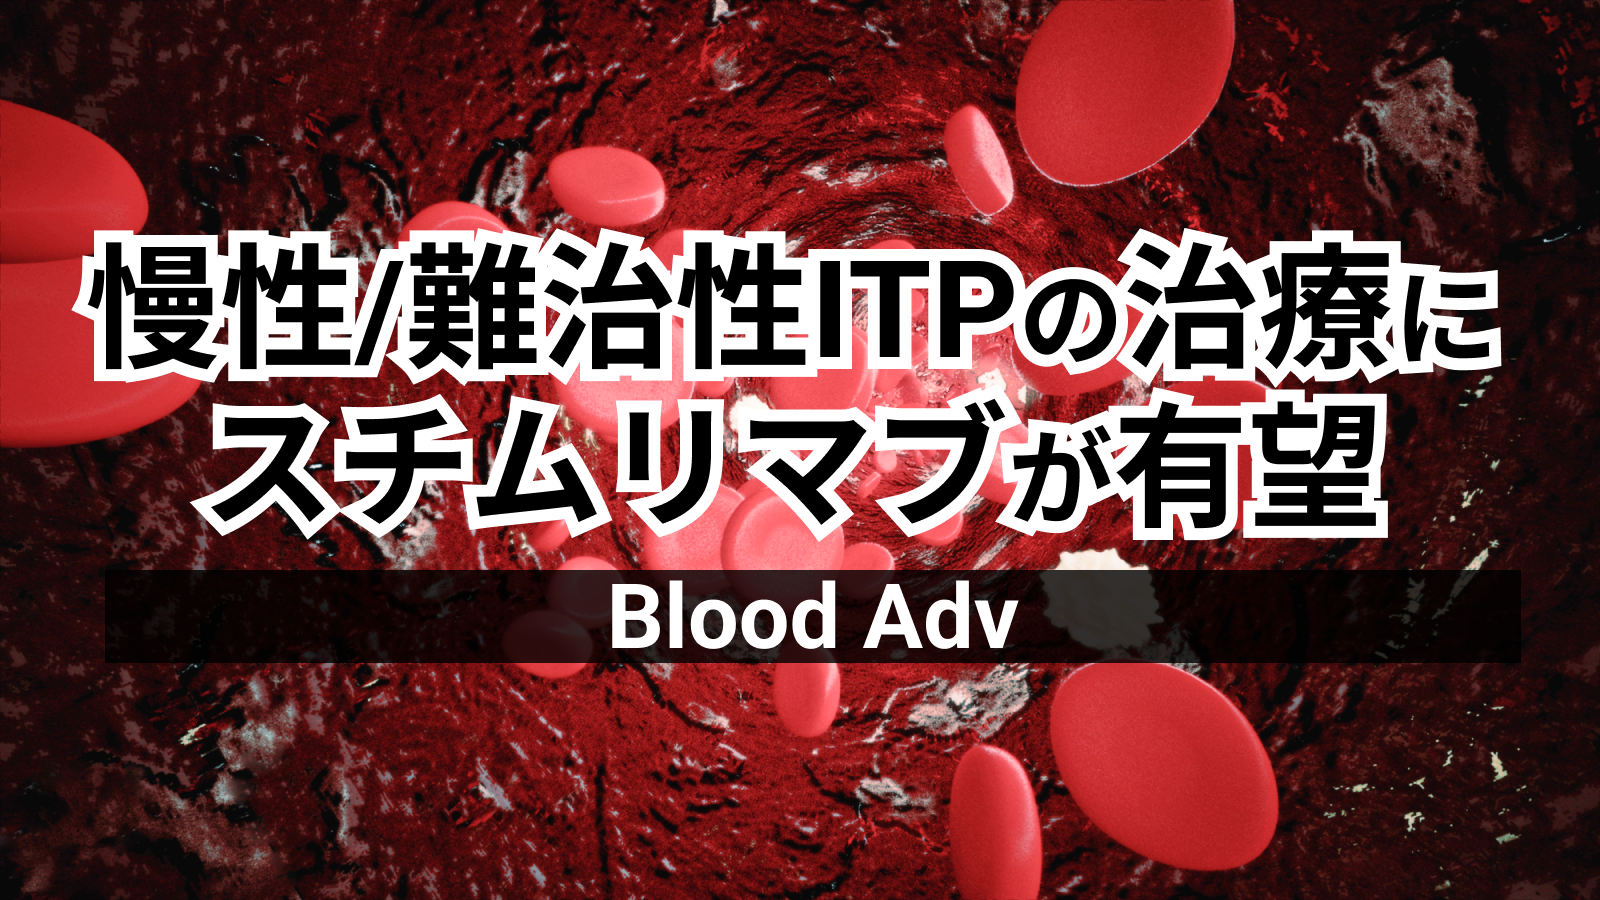 【Blood Adv】慢性/難治性の免疫性血小板減少症治療にスチムリマブが有望